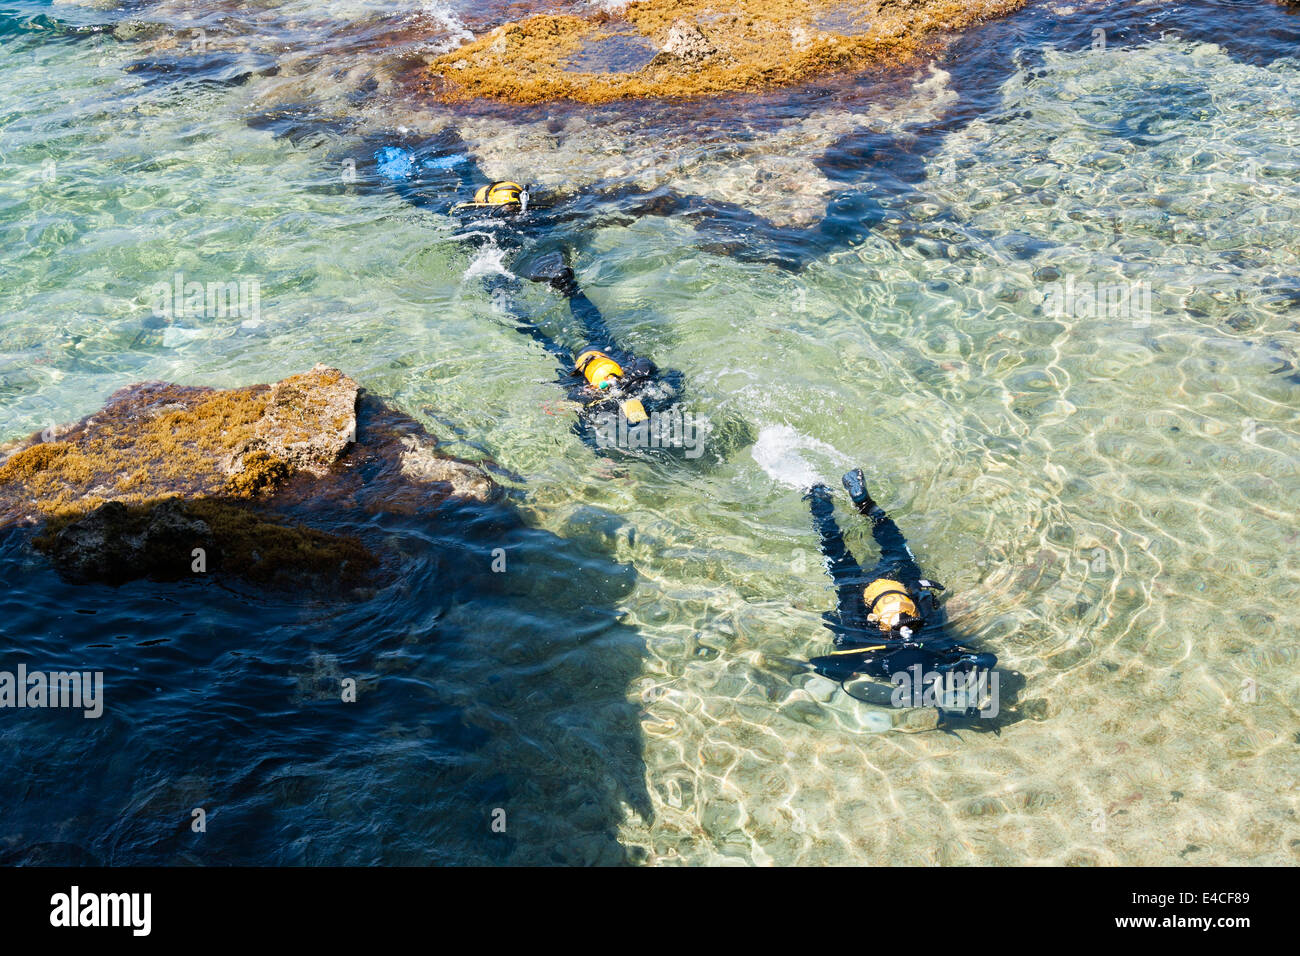 Scuba divers at Cirkewwa, a popular dive spot on the Mediterranean island of Malta Stock Photo